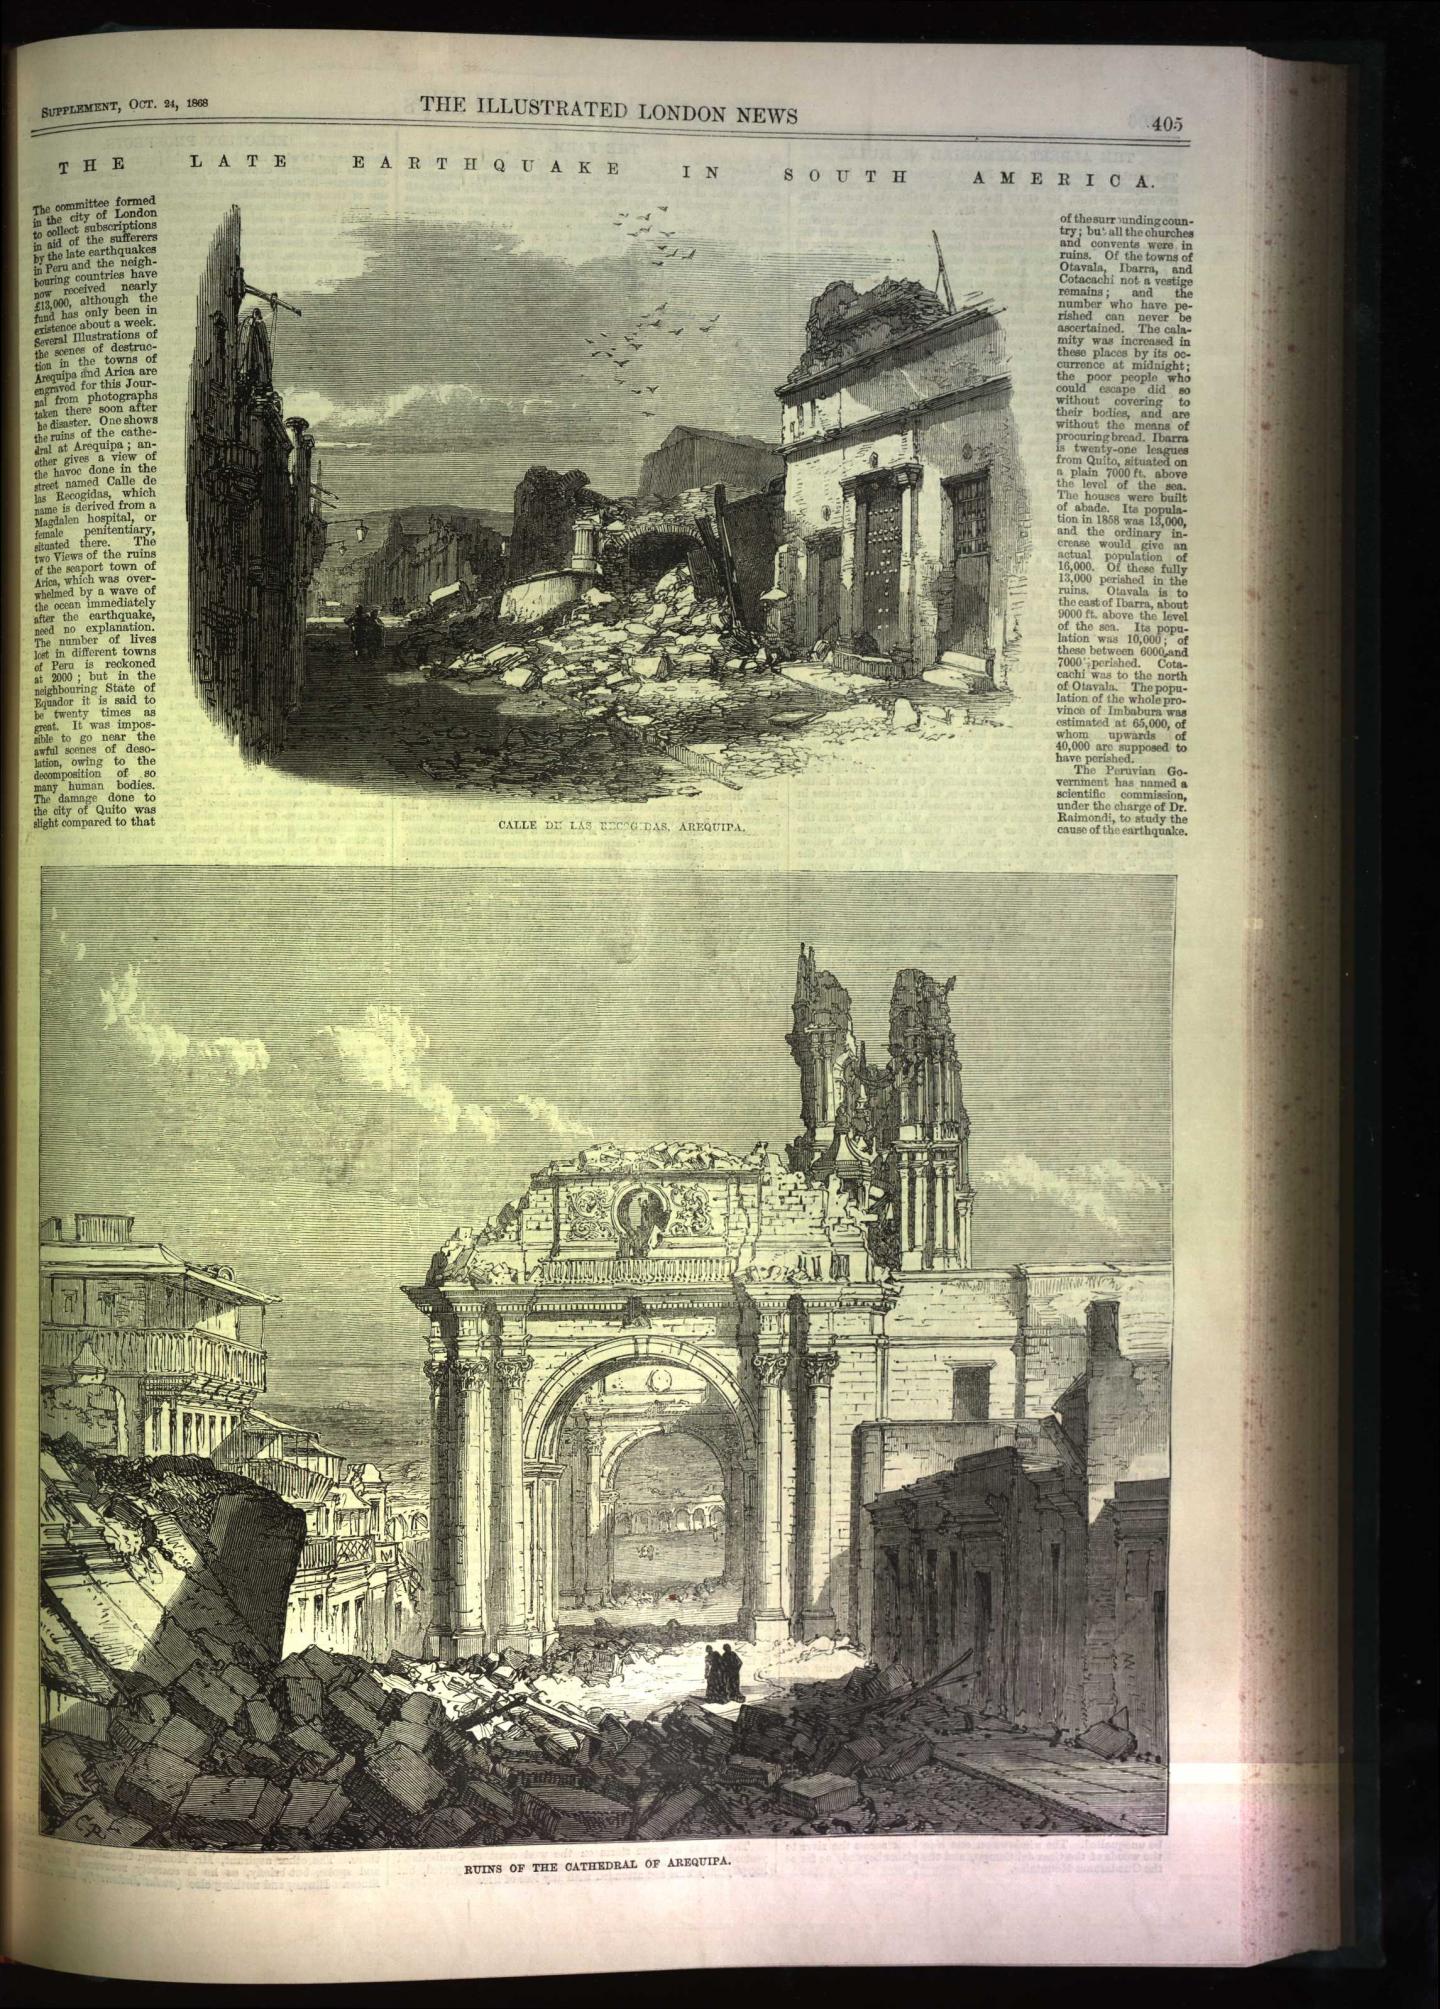 Illustrated London News, 24 October 1868 (item ID: ILN)